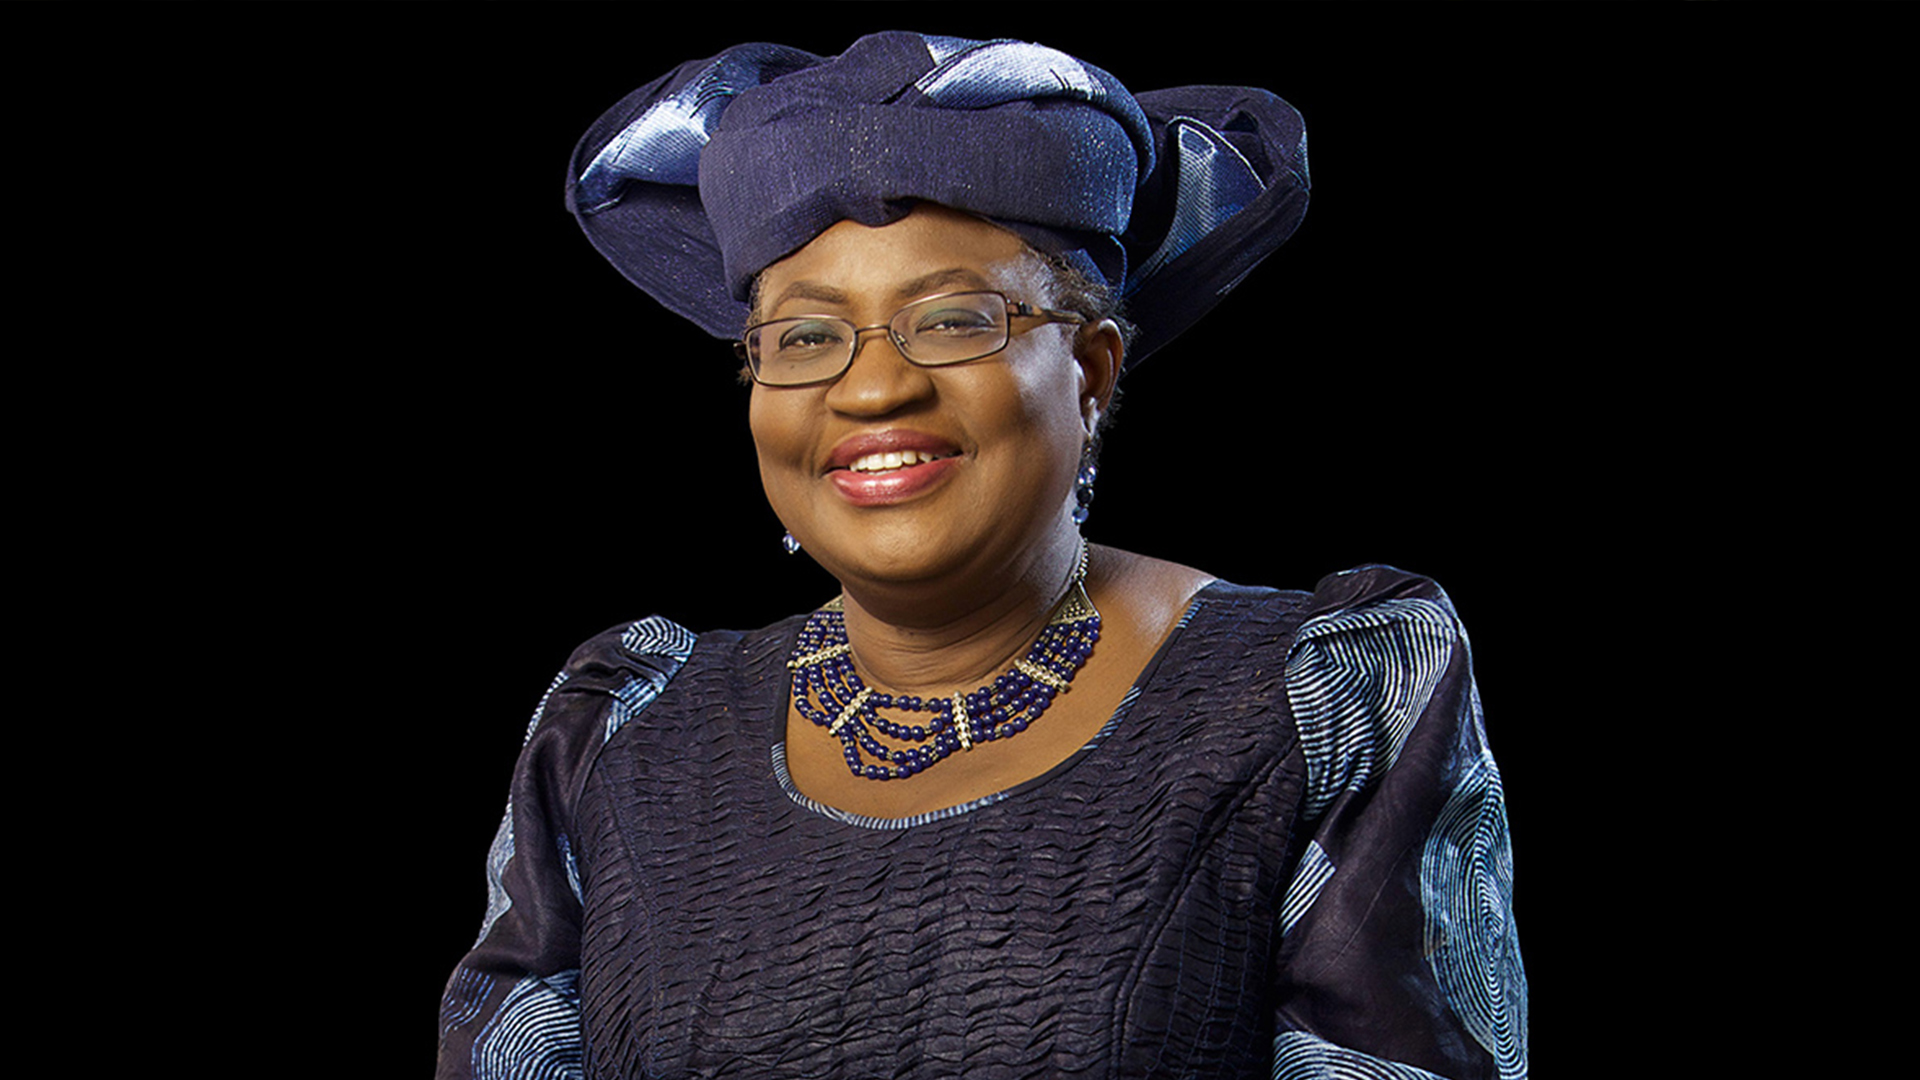 Ngozi Okonjo-Iweala chosen as Director-General of the World Trade Organization